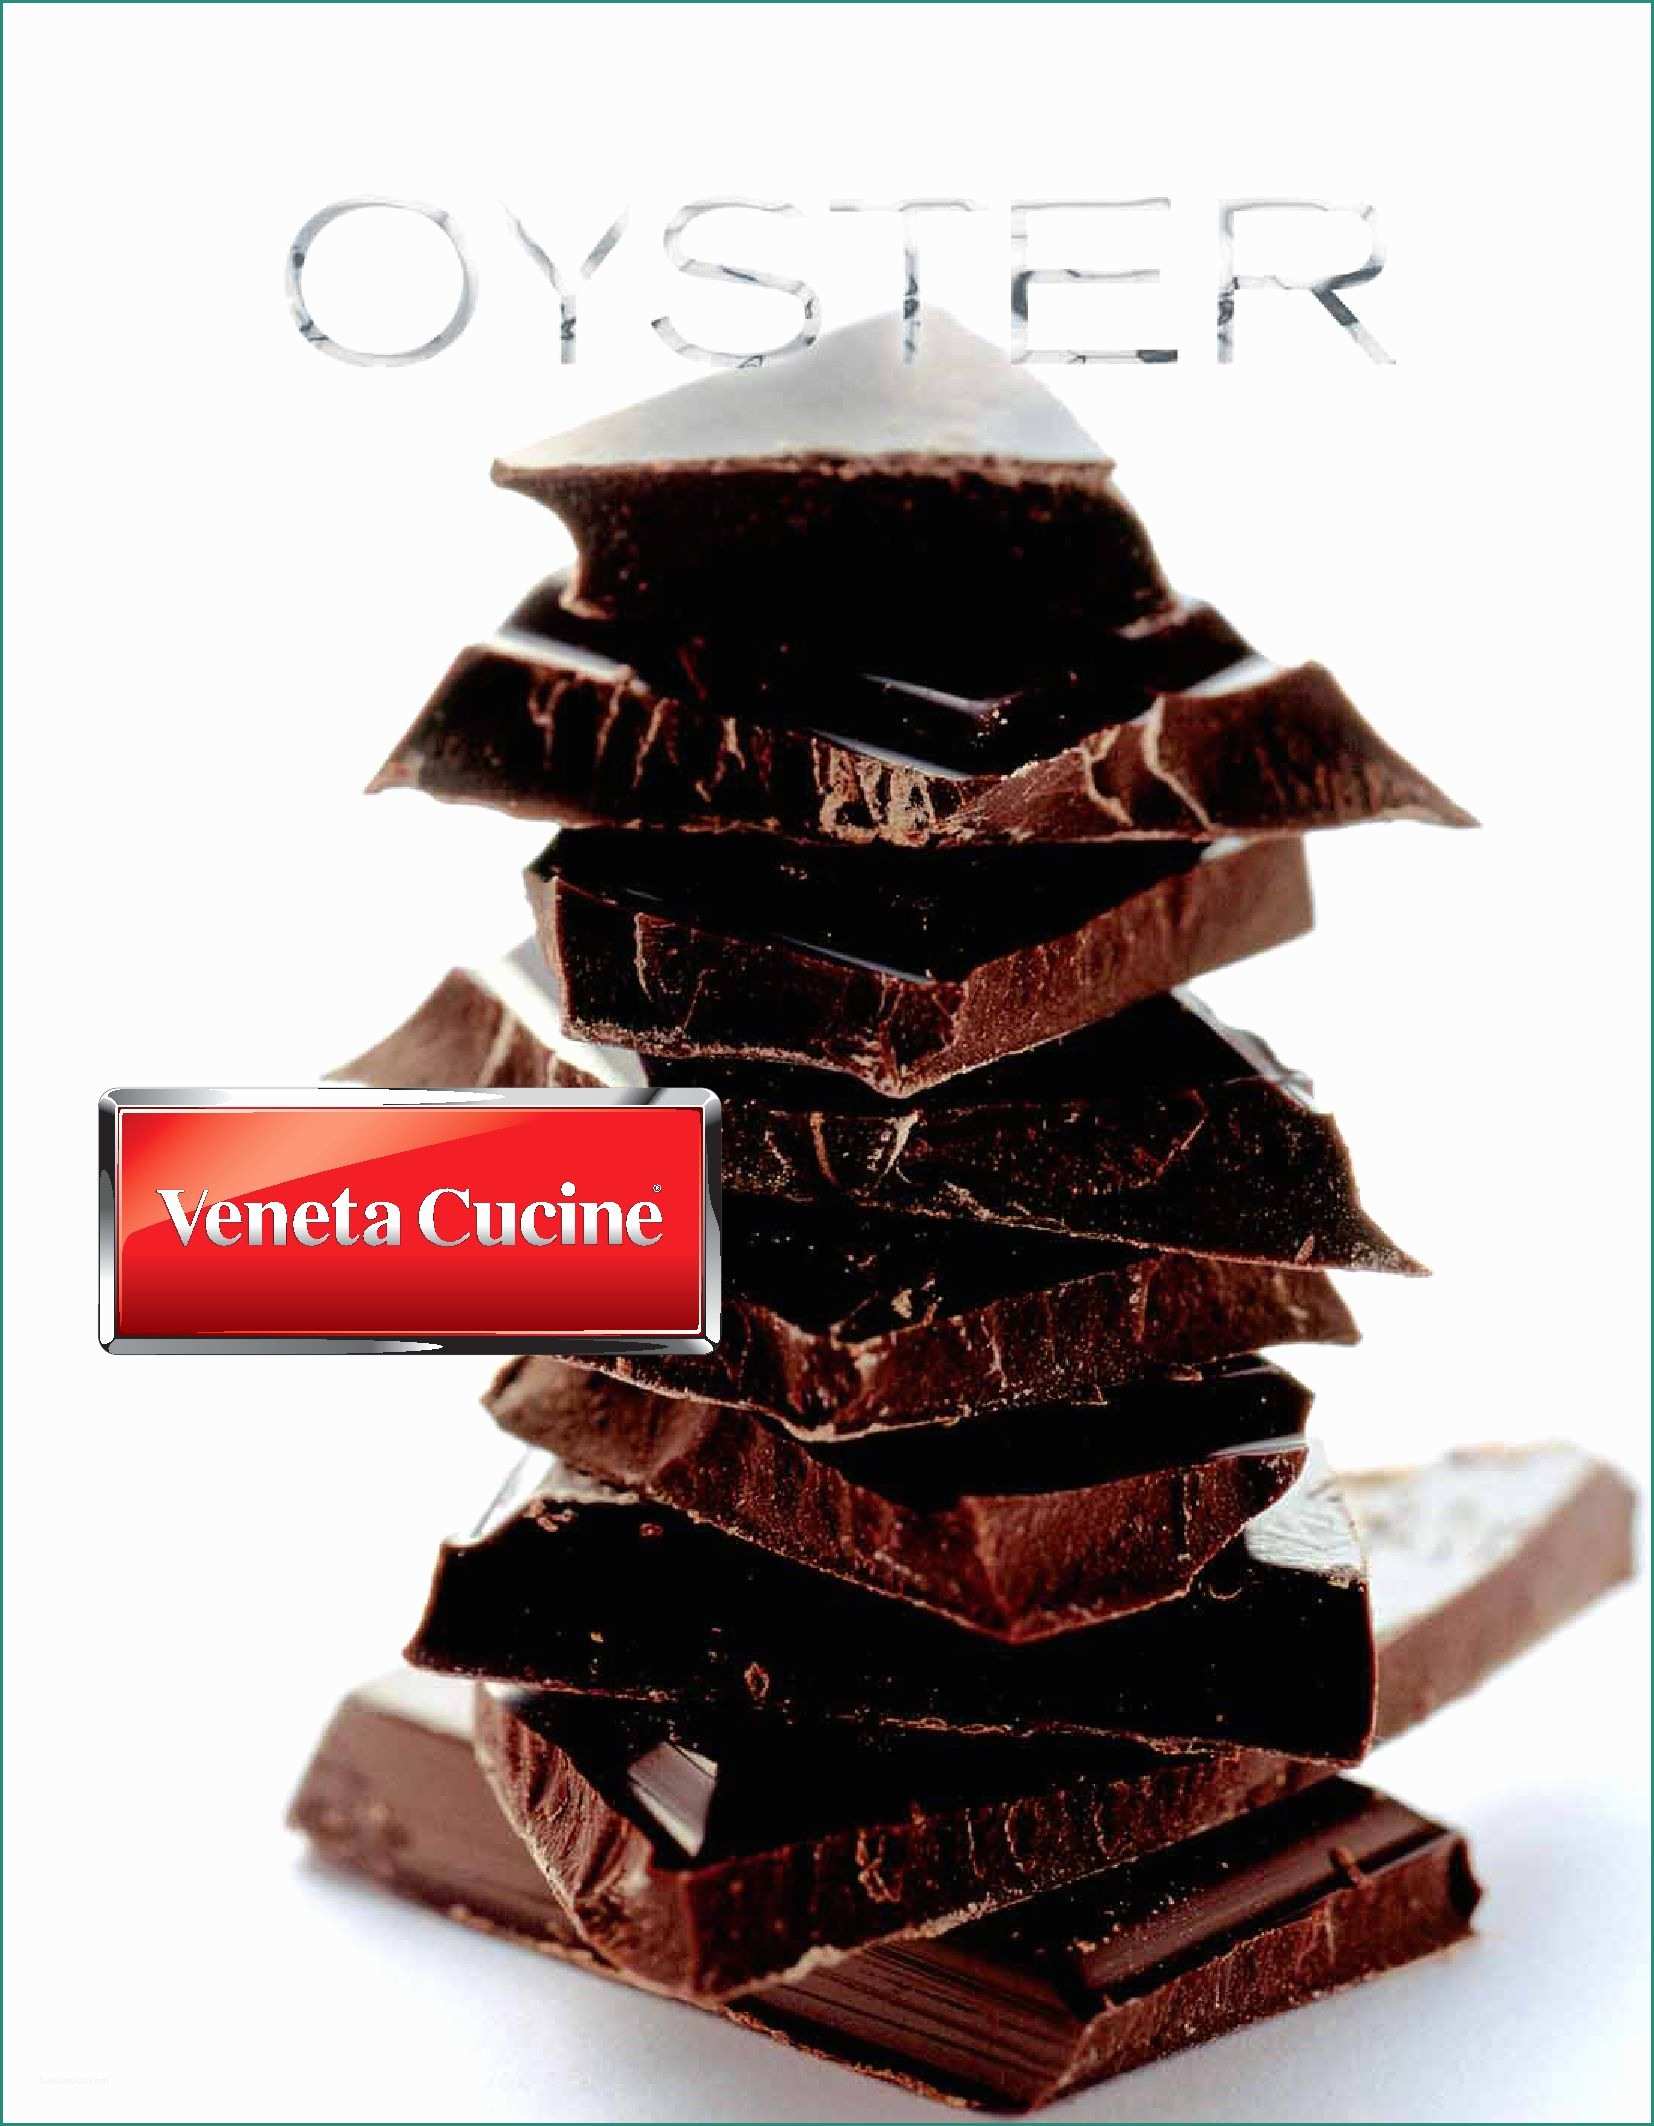 Veneta Cucine Oyster Pro E Catálogo Veneta Cucine Oyster by 1216 Mobiliaris issuu